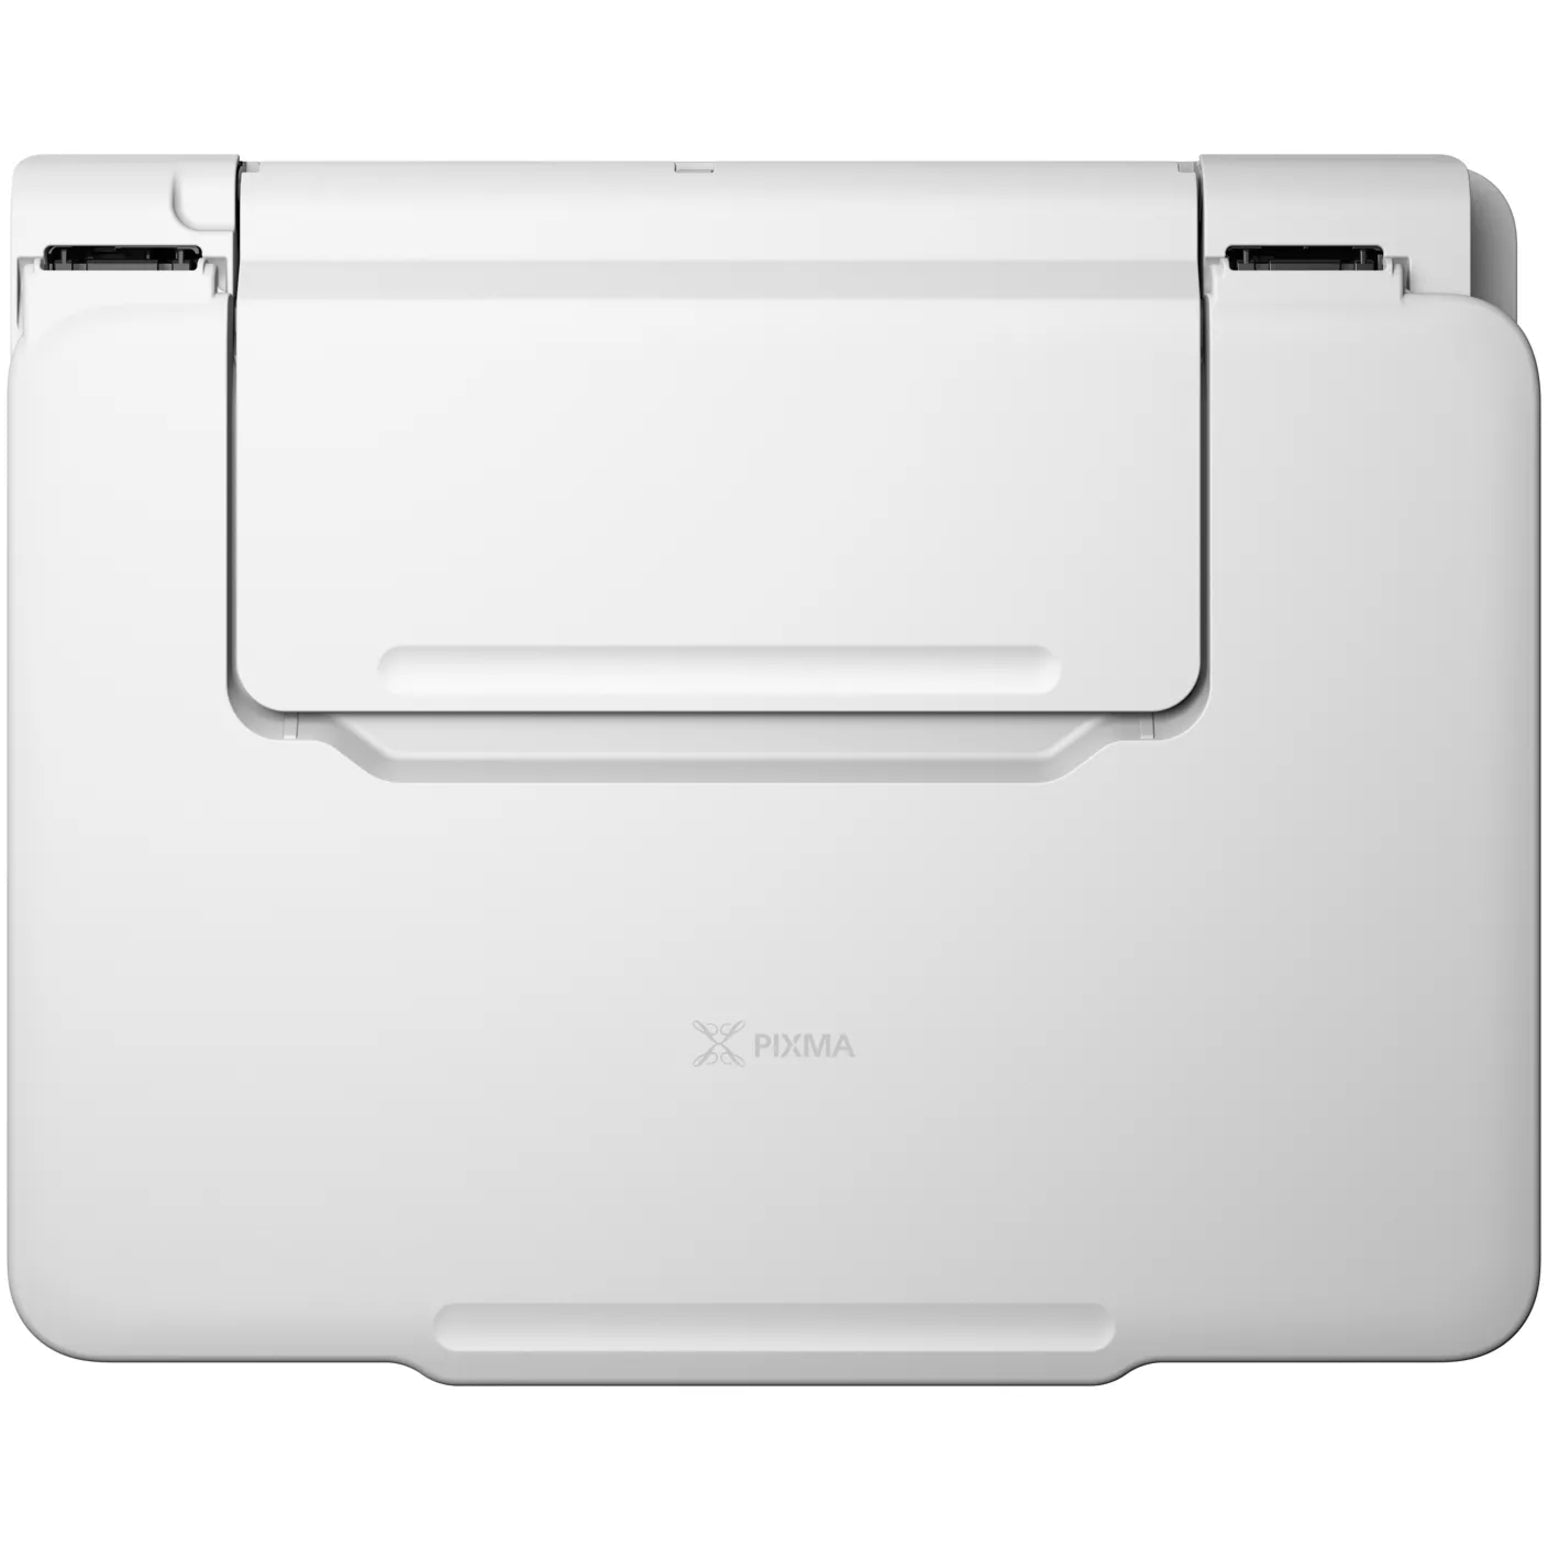 Canon 5805C022 PIXMA G3270 Wireless Inkjet Multifunction Printer, Color, White